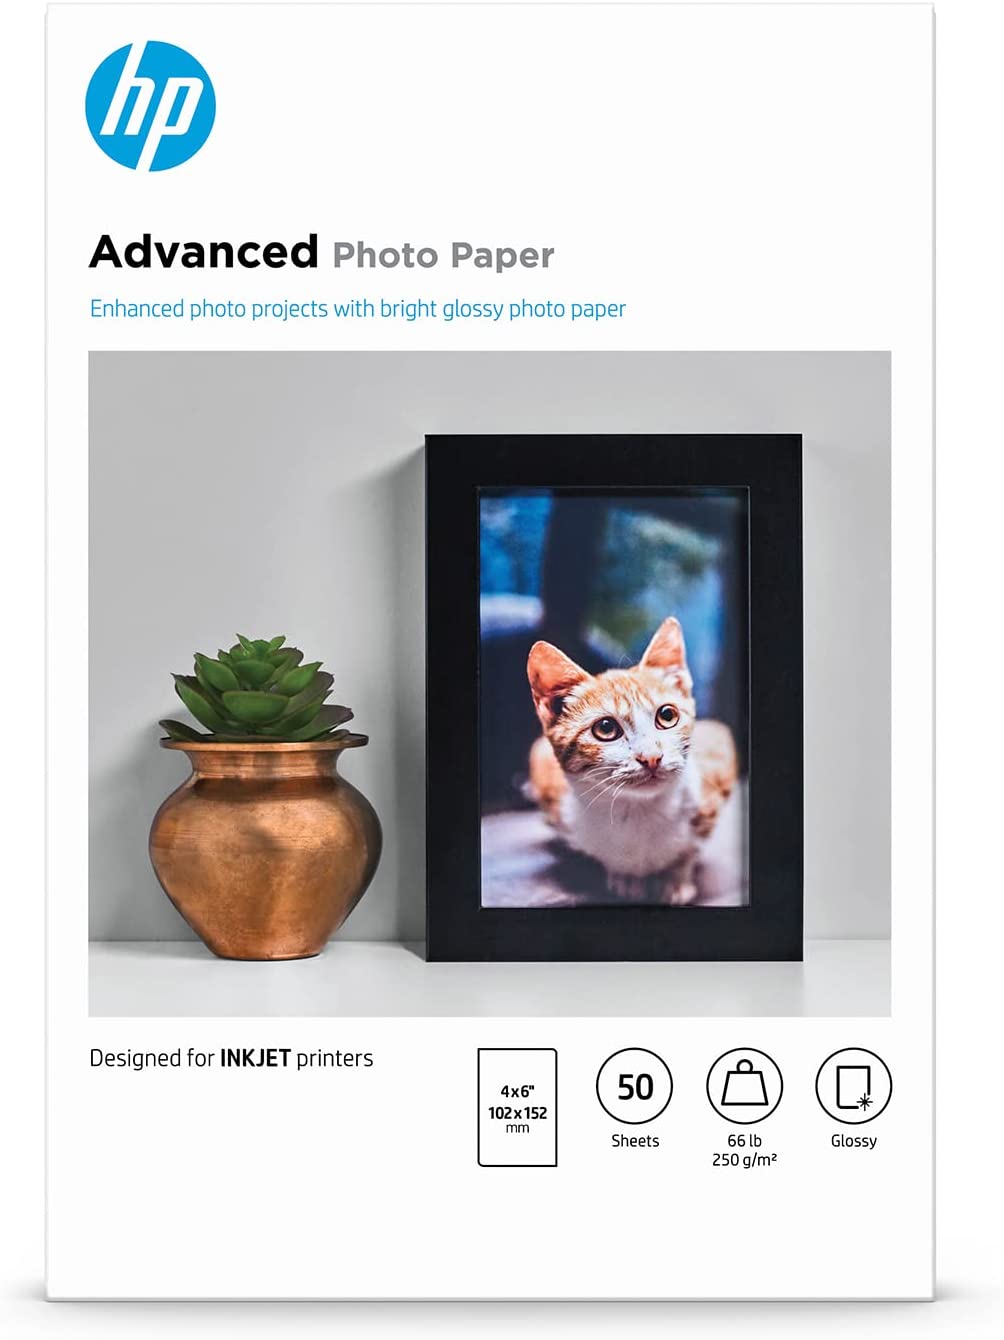 HP Advanced Photo Paper – Glossy